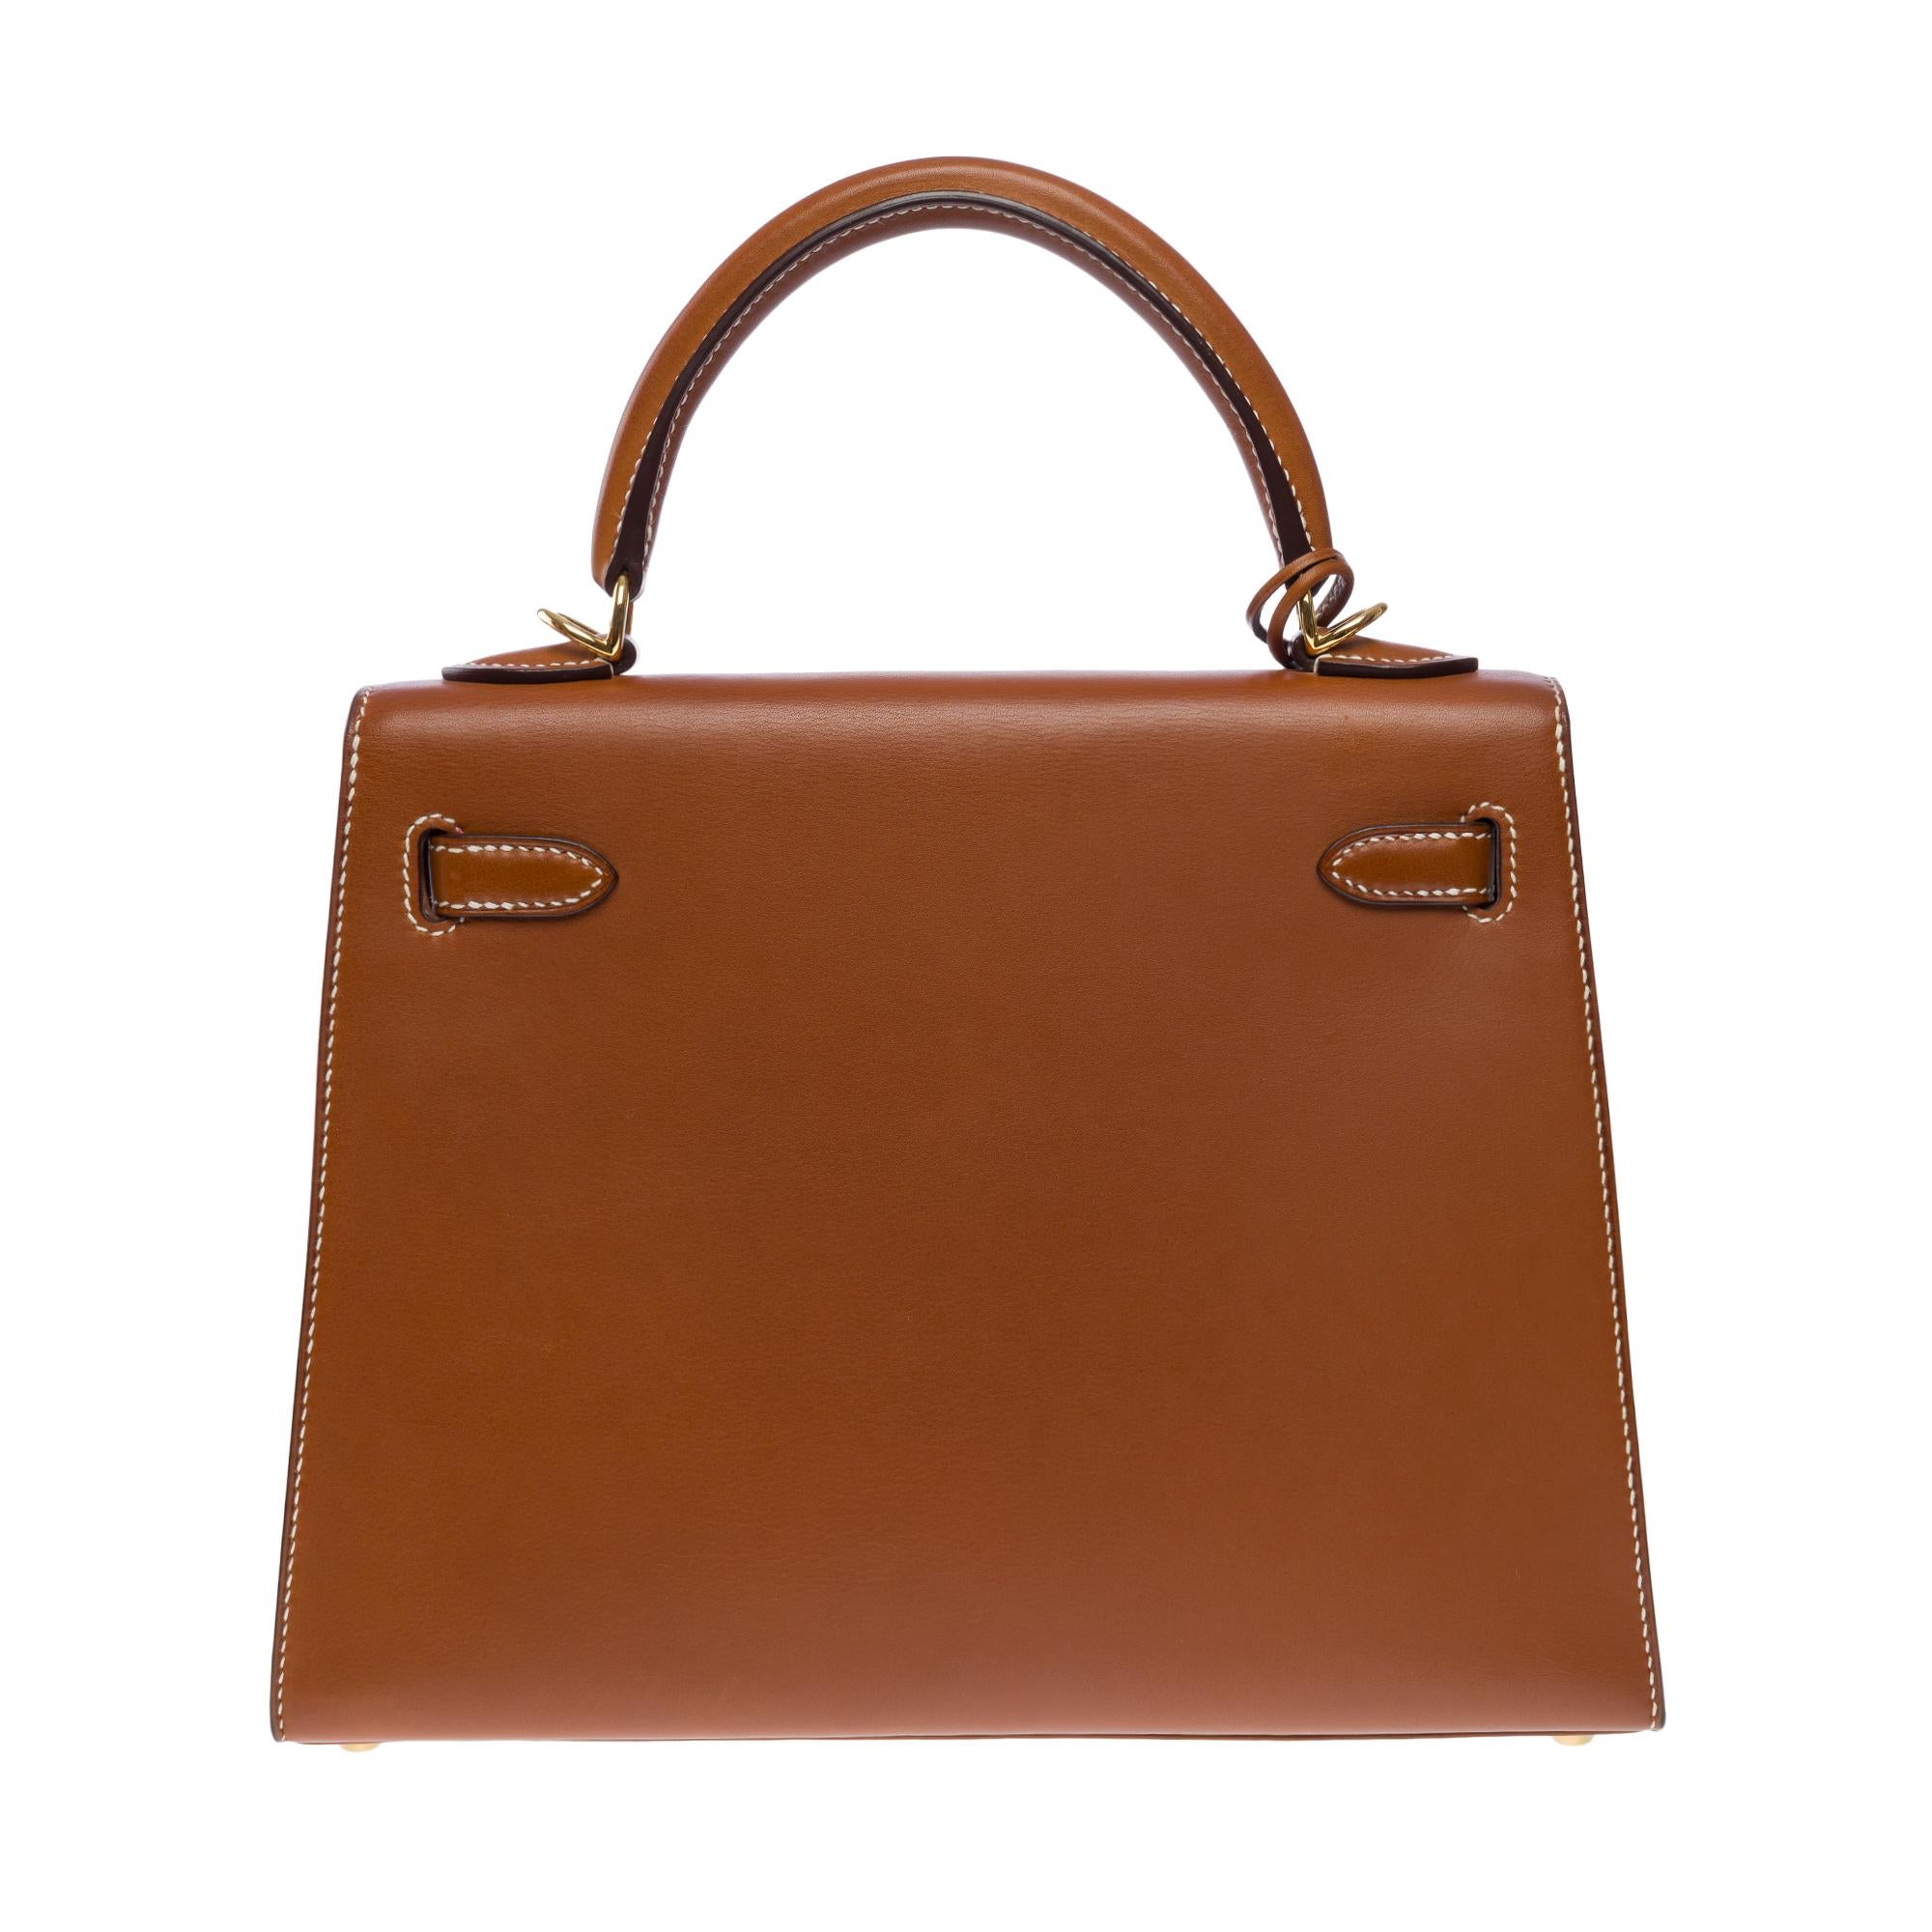 Women's Very Rare Hermès Kelly 25 sellier handbag strap in Gold Barenia leather, GHW